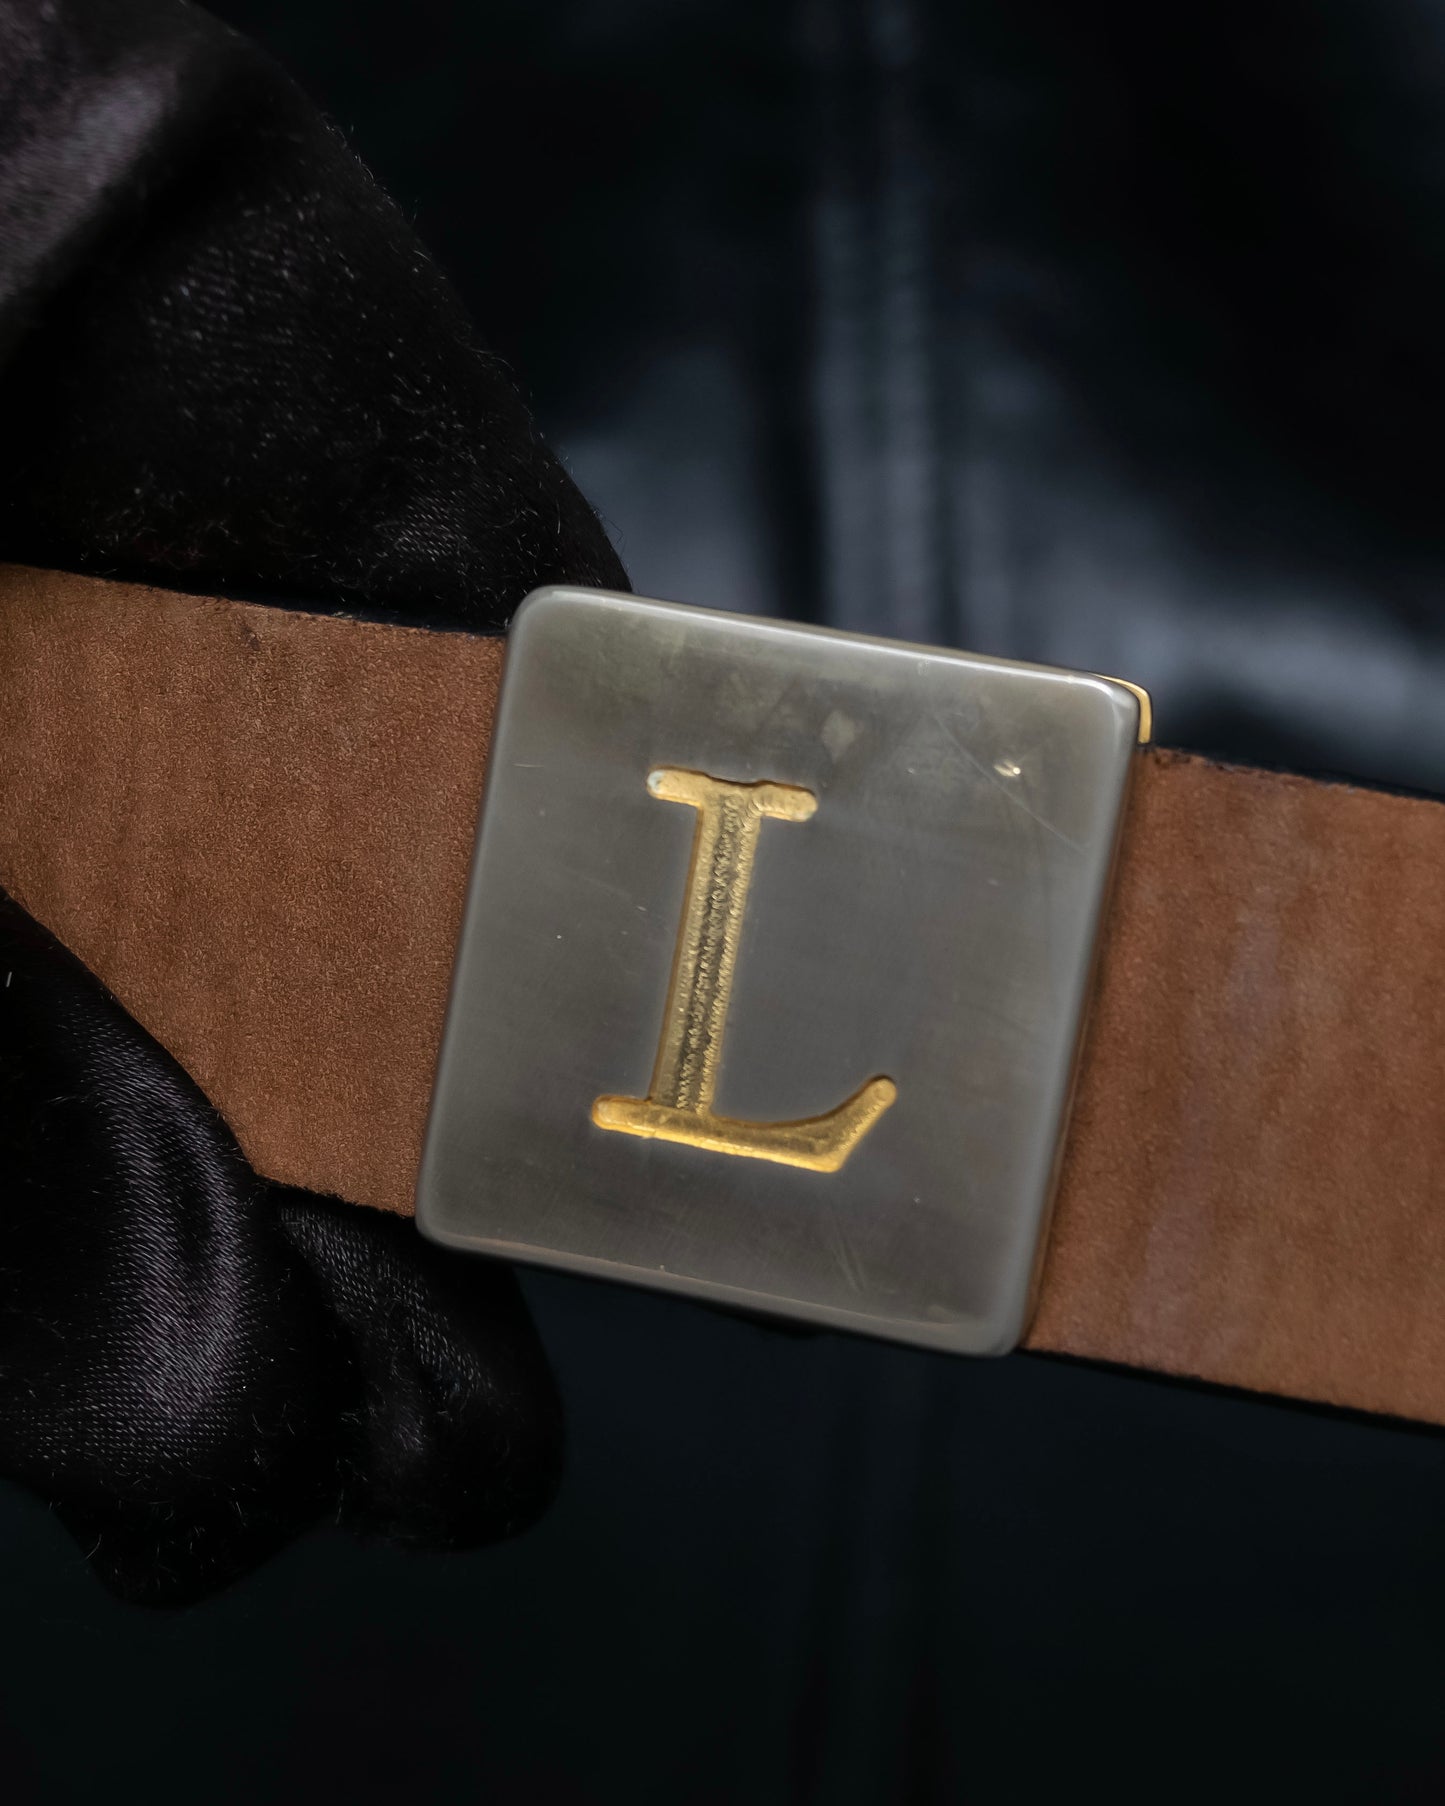 "LOEWE" logo spell design leather belt